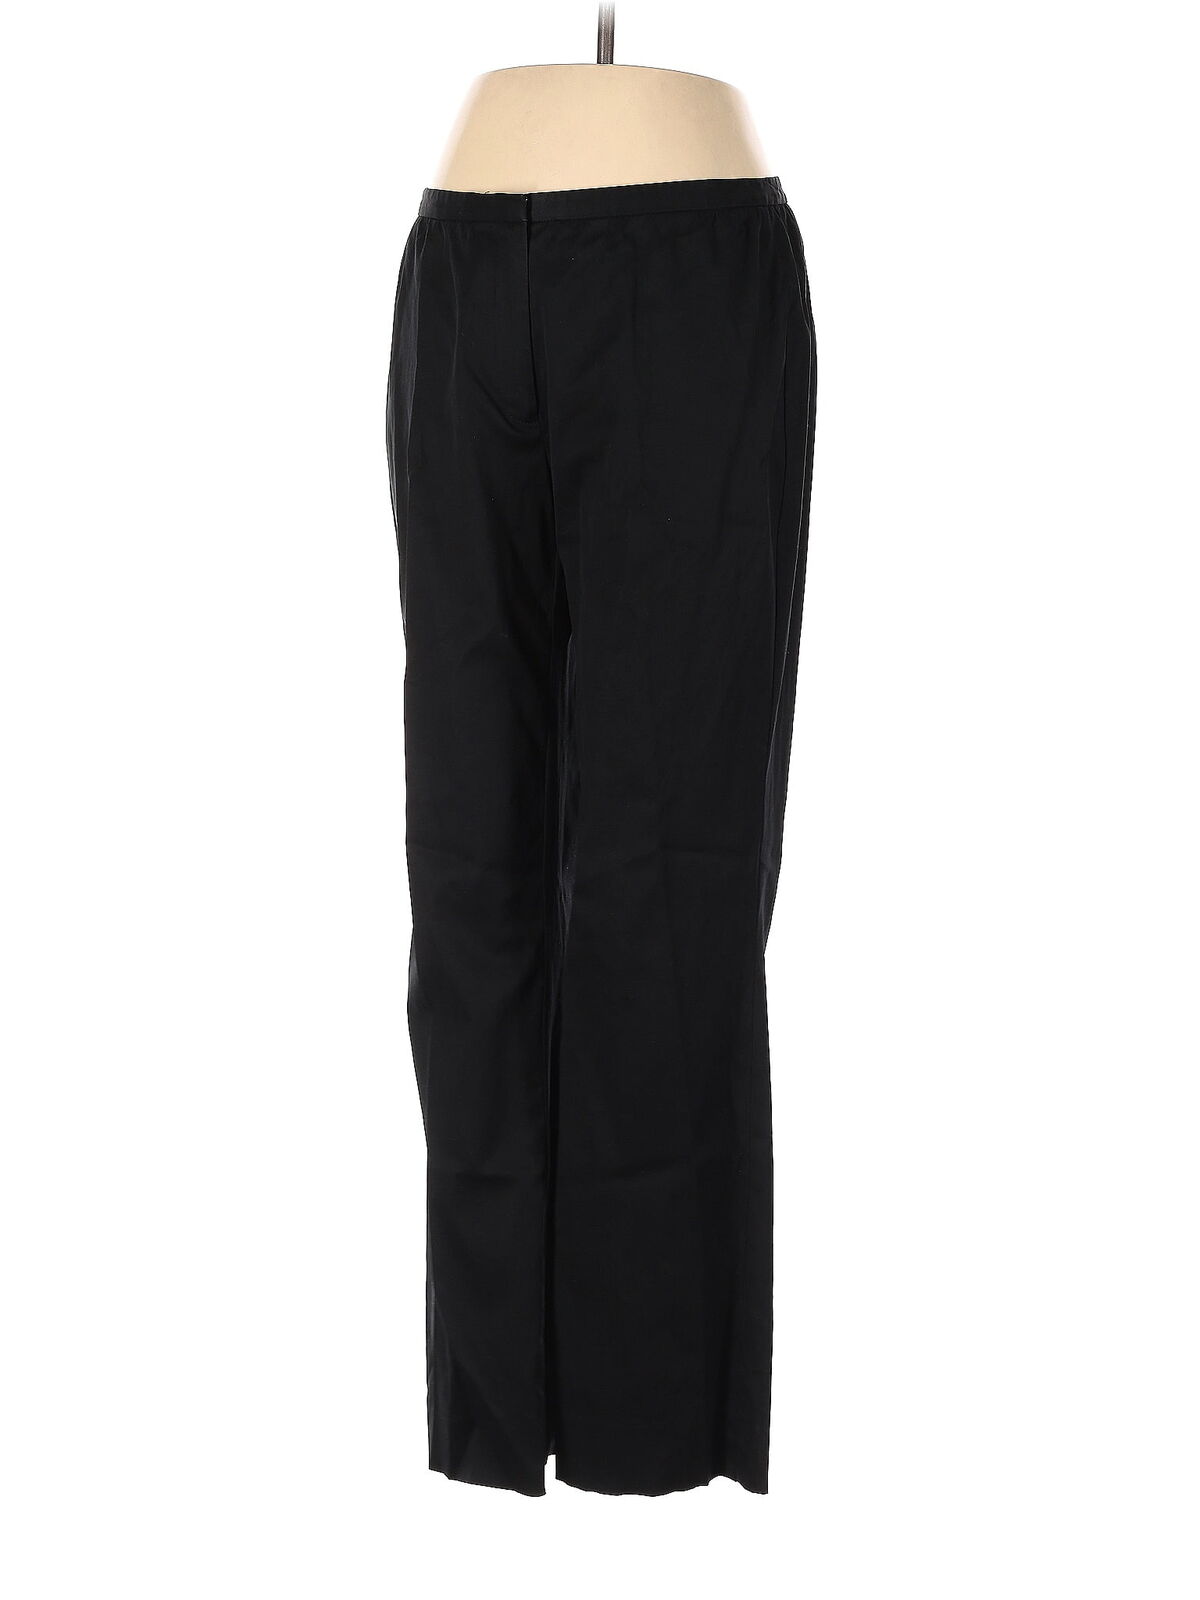 Calvin Klein Women Black Casual Pants 4 - image 1